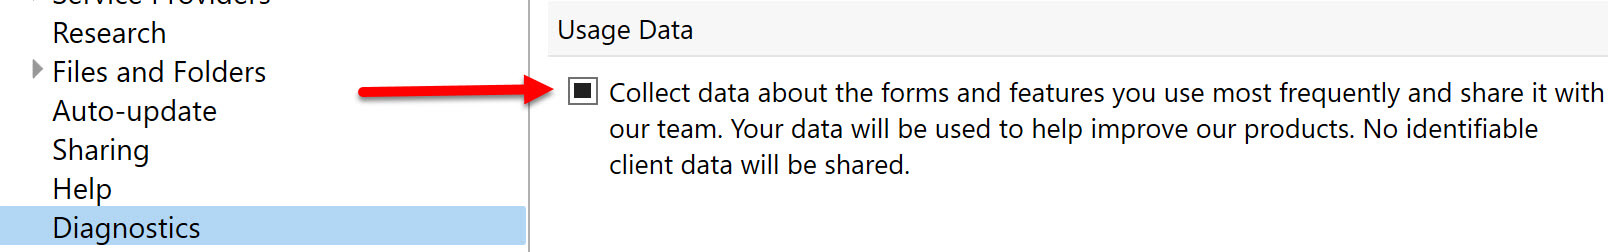 Screen Capture: Diagnostics usage data option